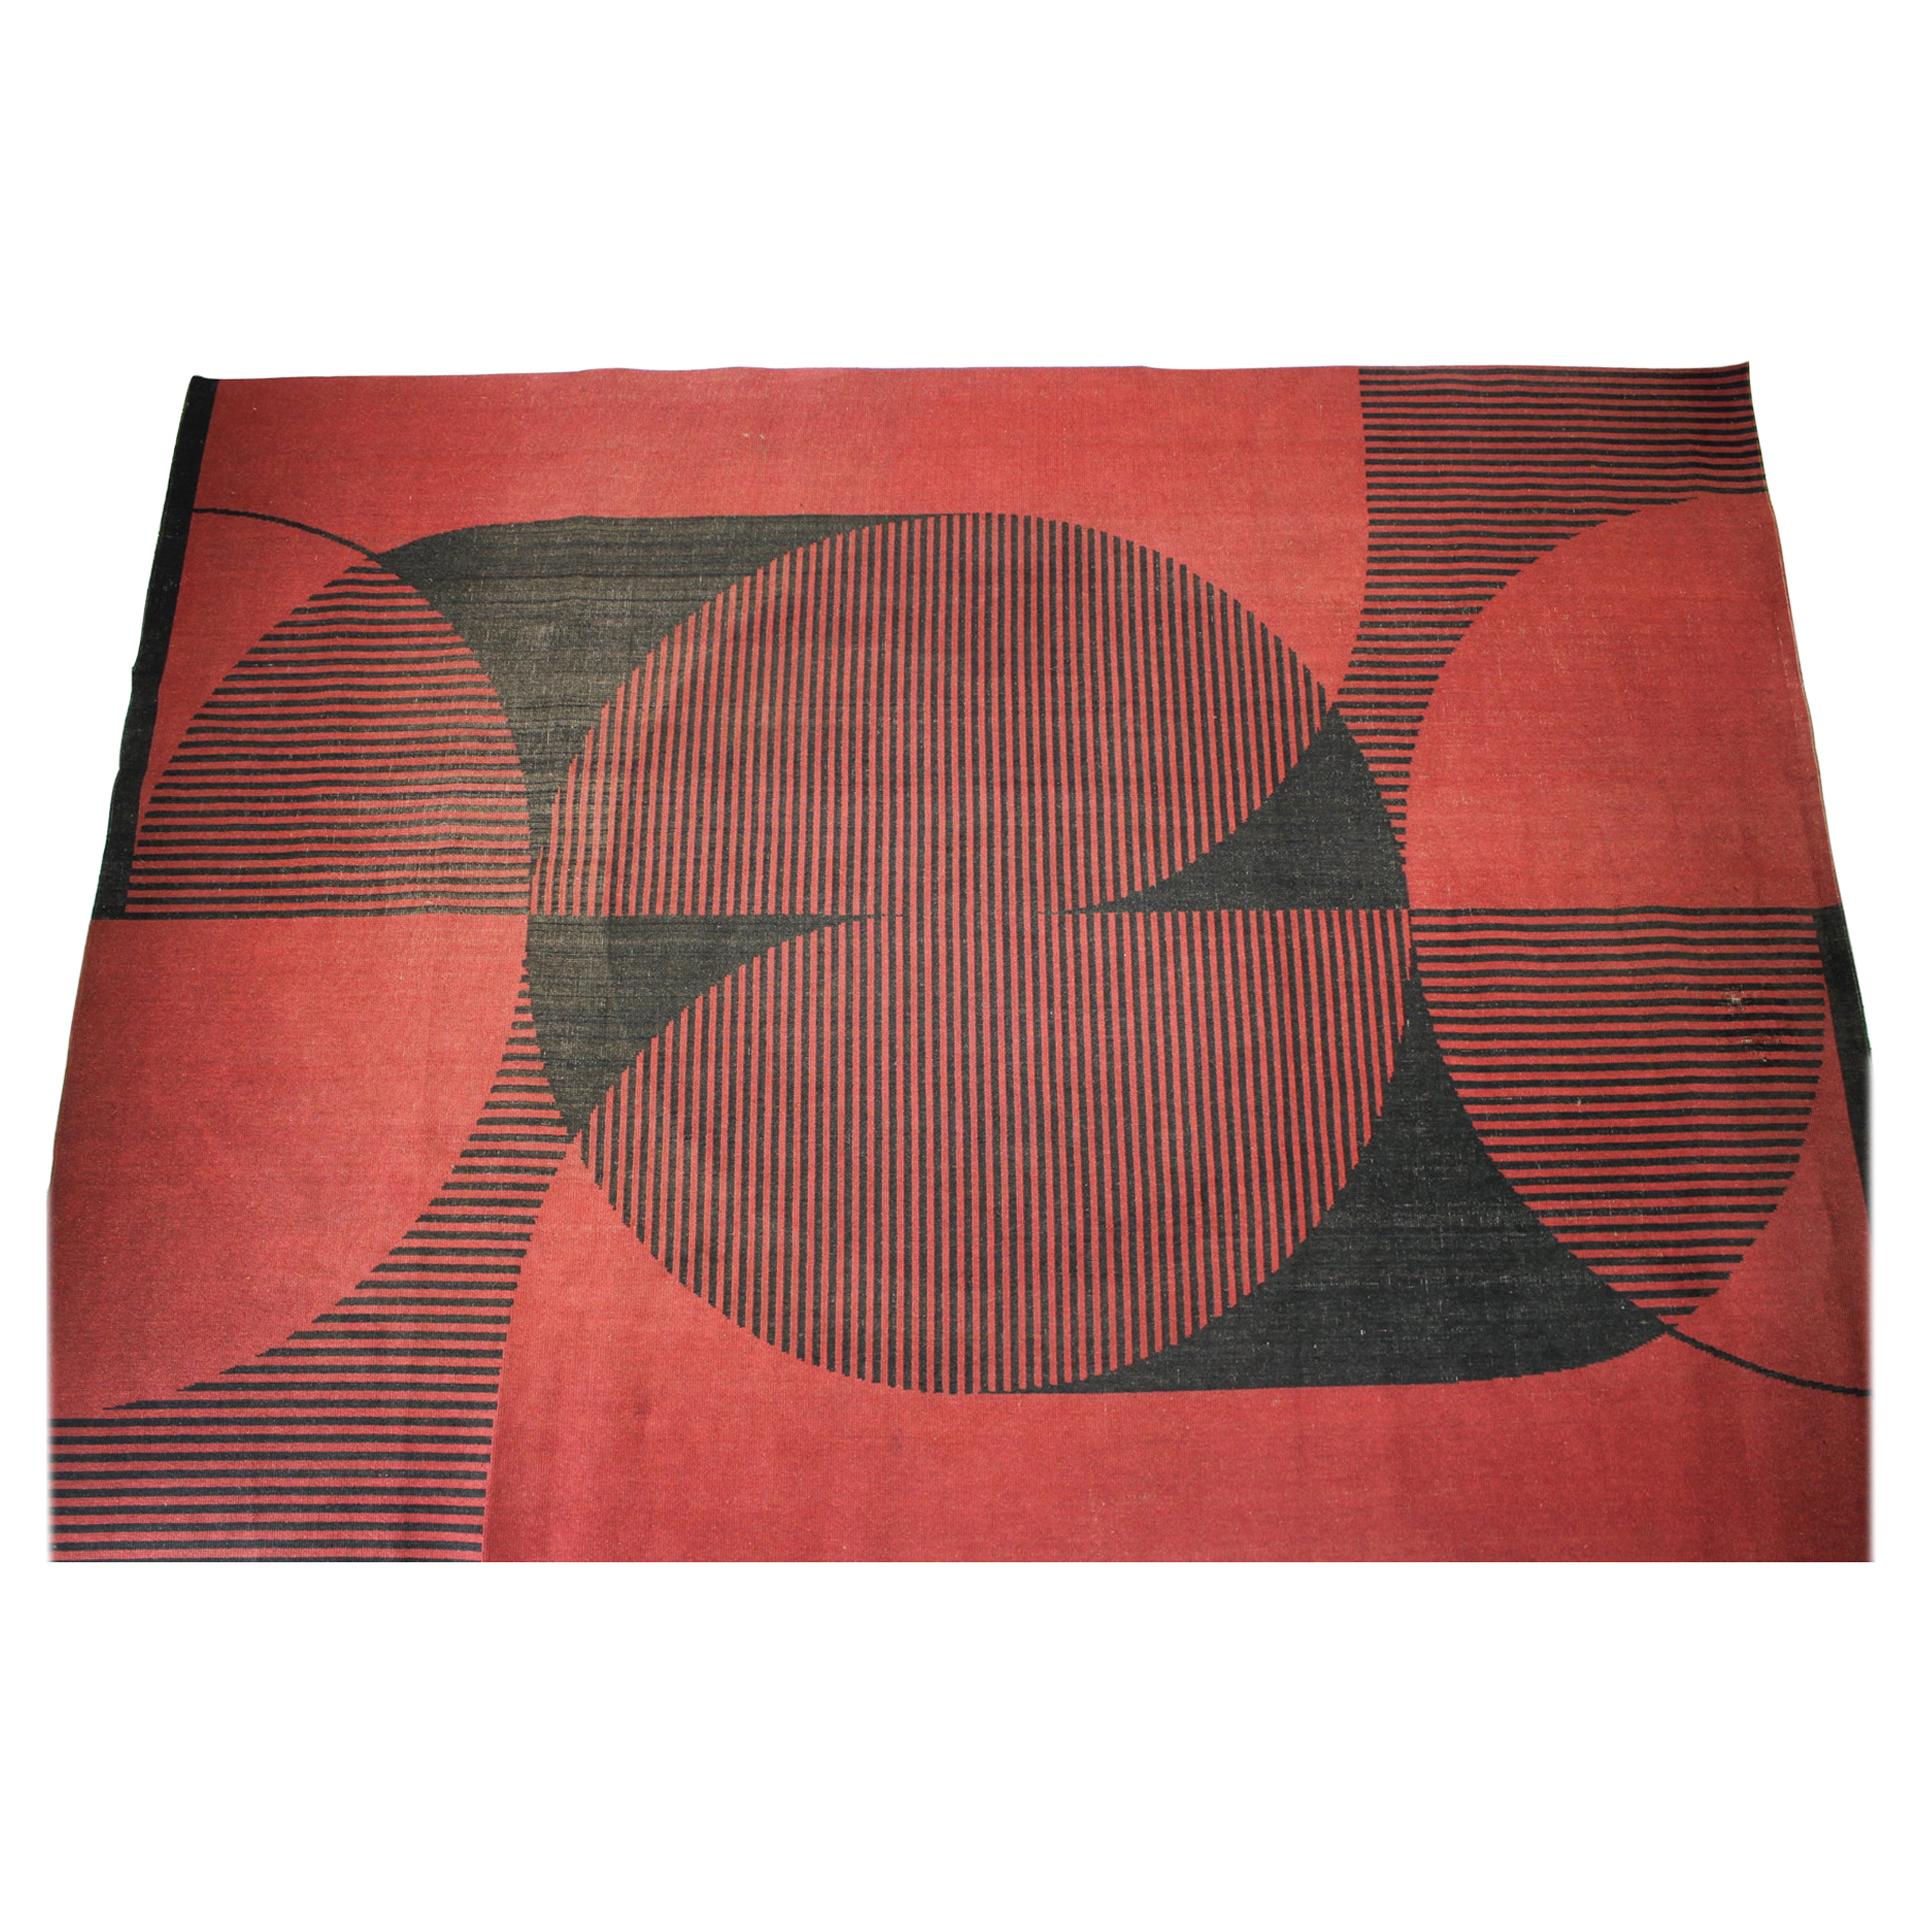 Abstract Modernist Geometric Design Carpet / Rug, 1970s